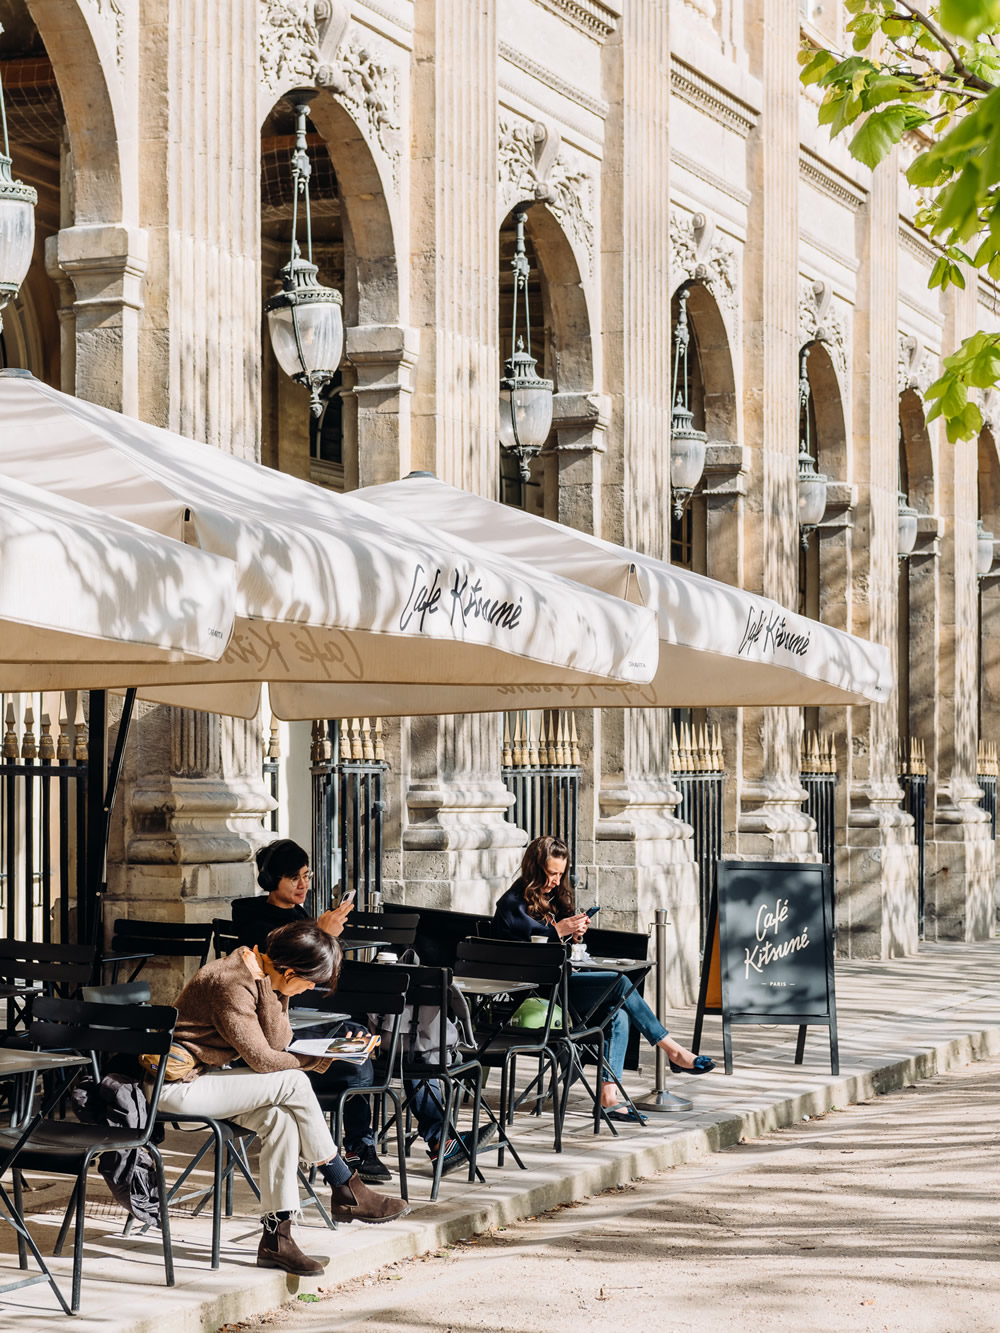 Specialty coffee shops in Paris